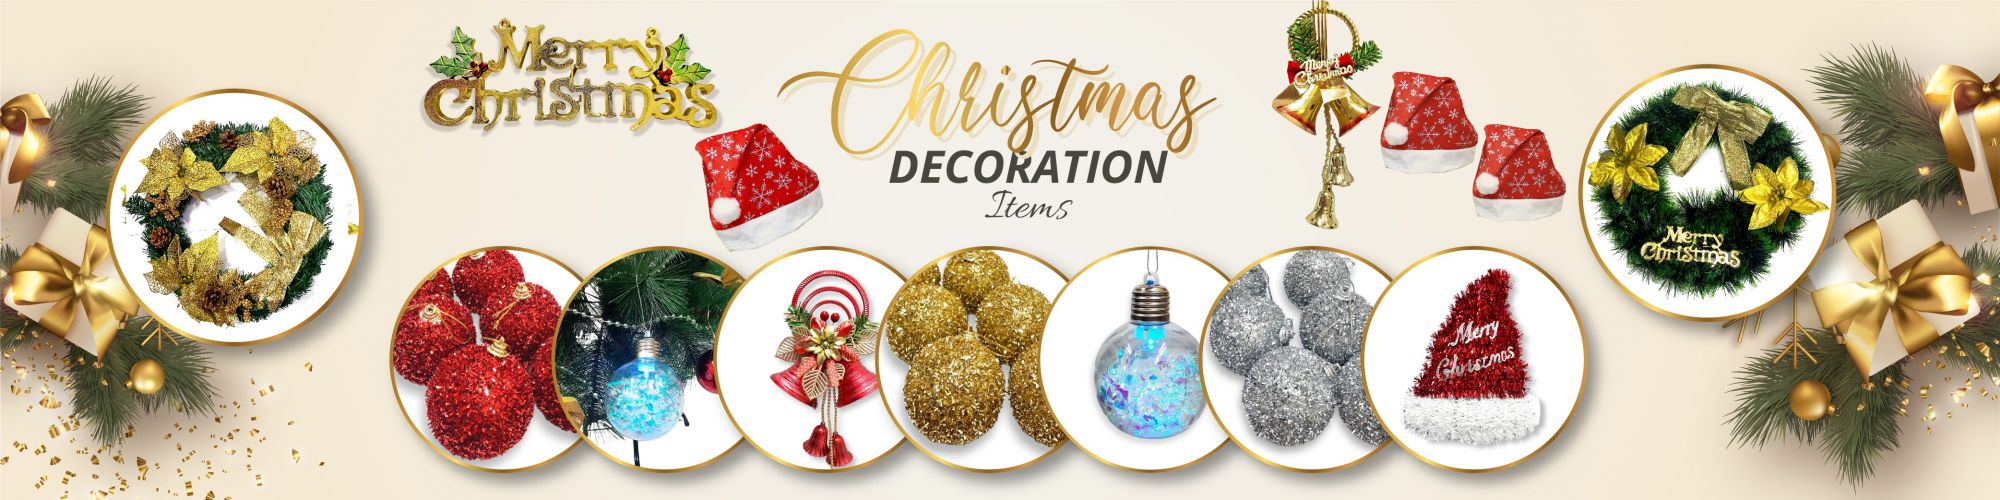 Christmas decoration items